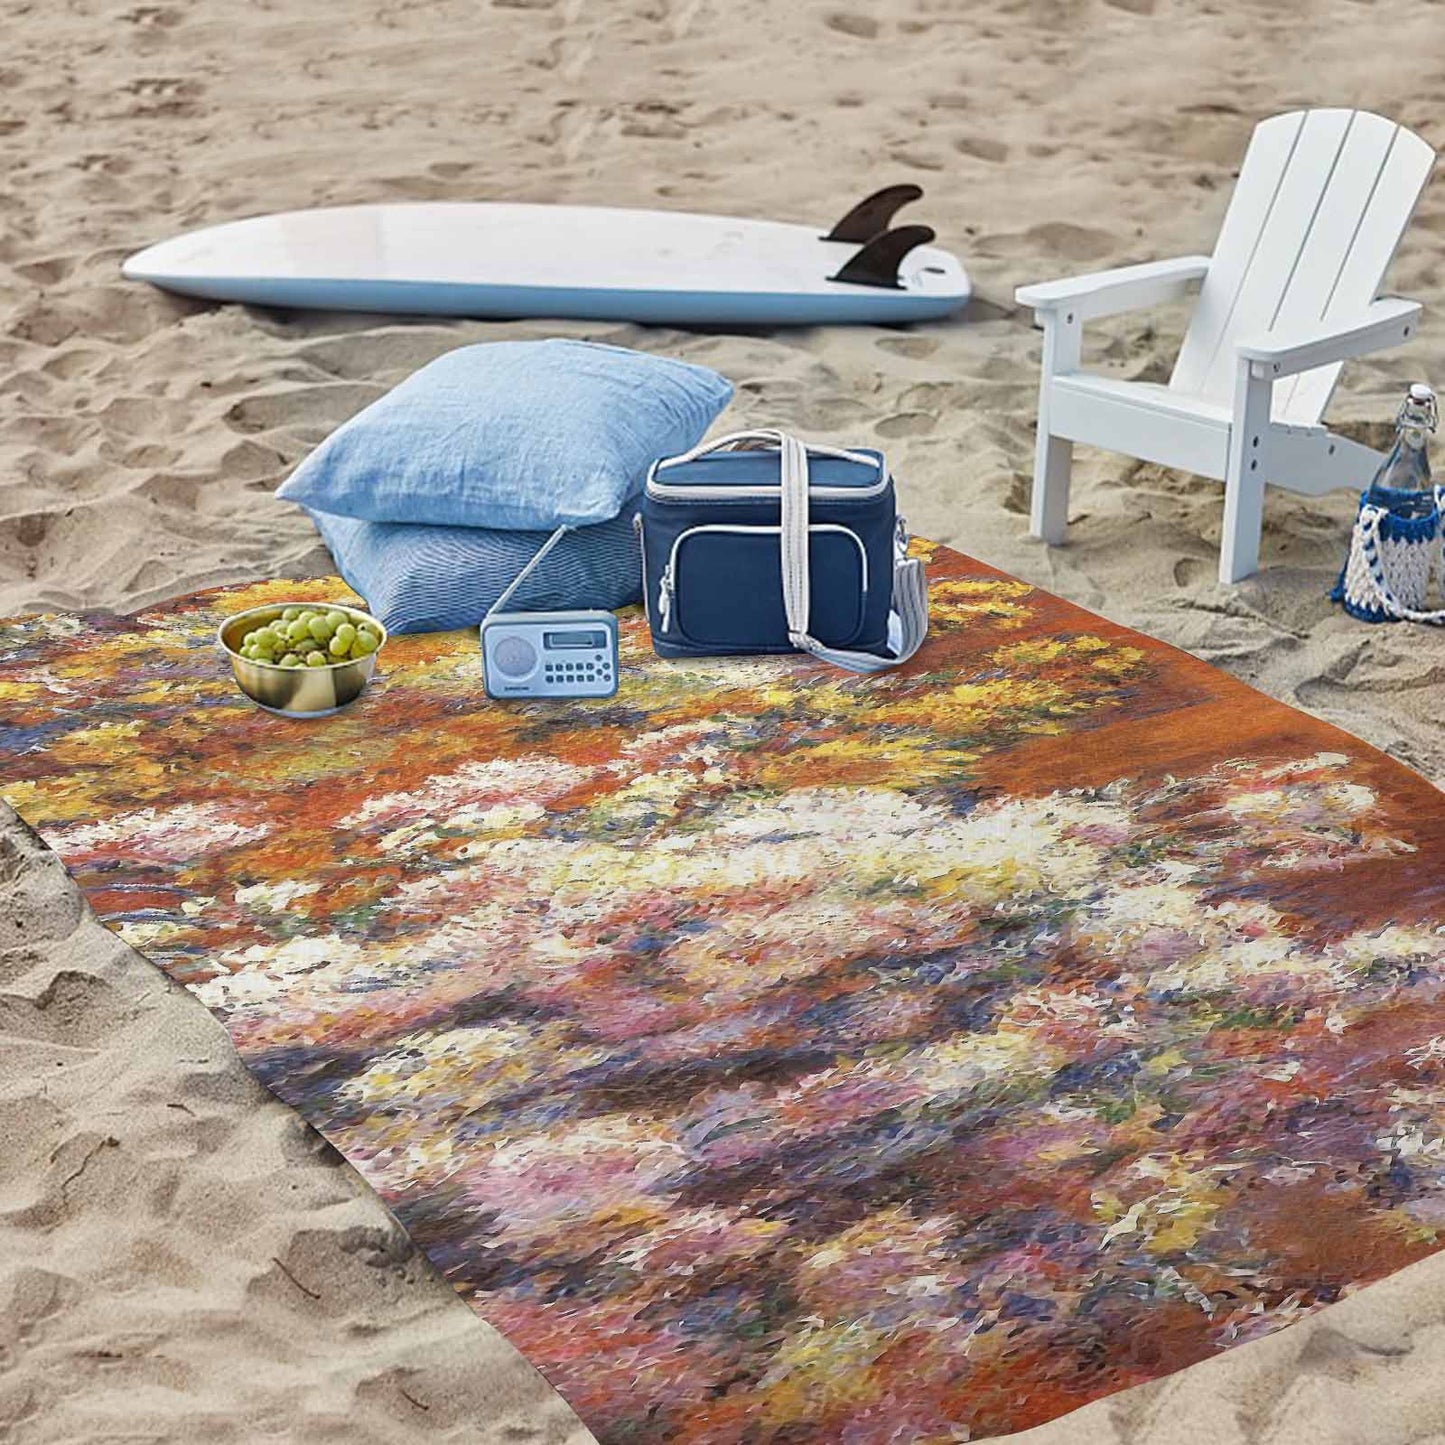 Vintage Floral waterproof picnic mat, 81 x 55in, Design 57